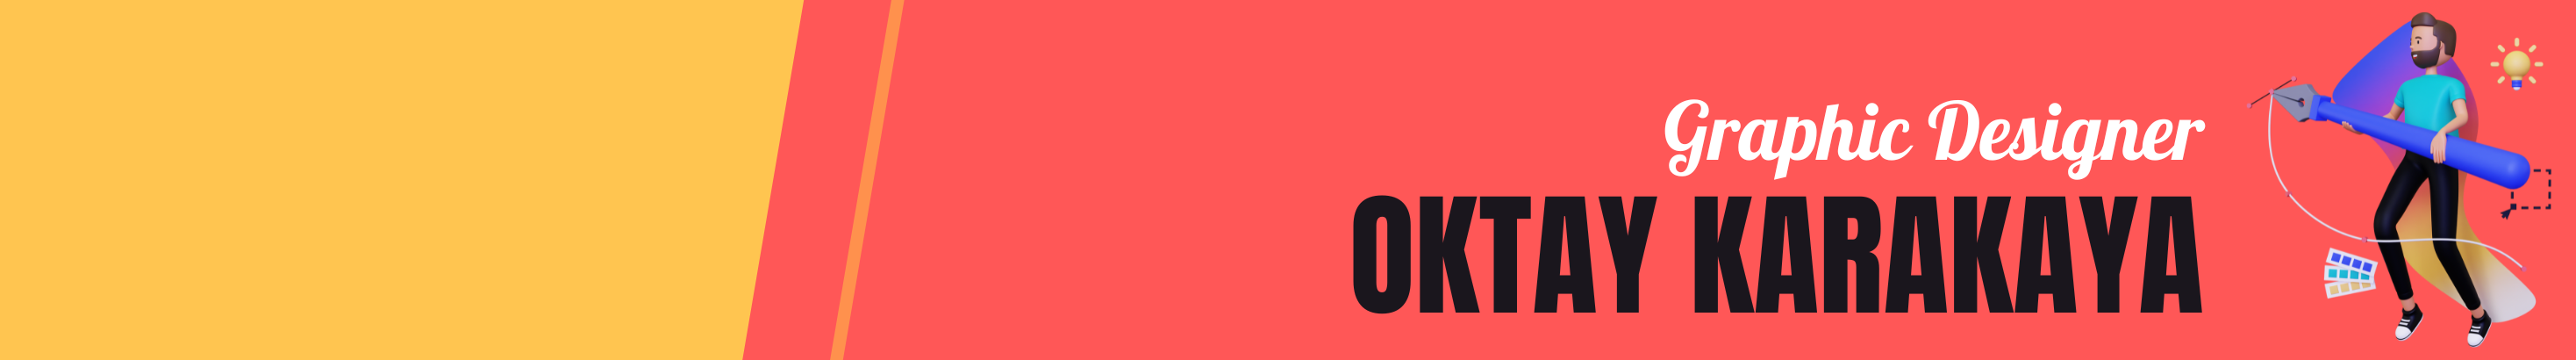 Oktay Karakaya's profile banner